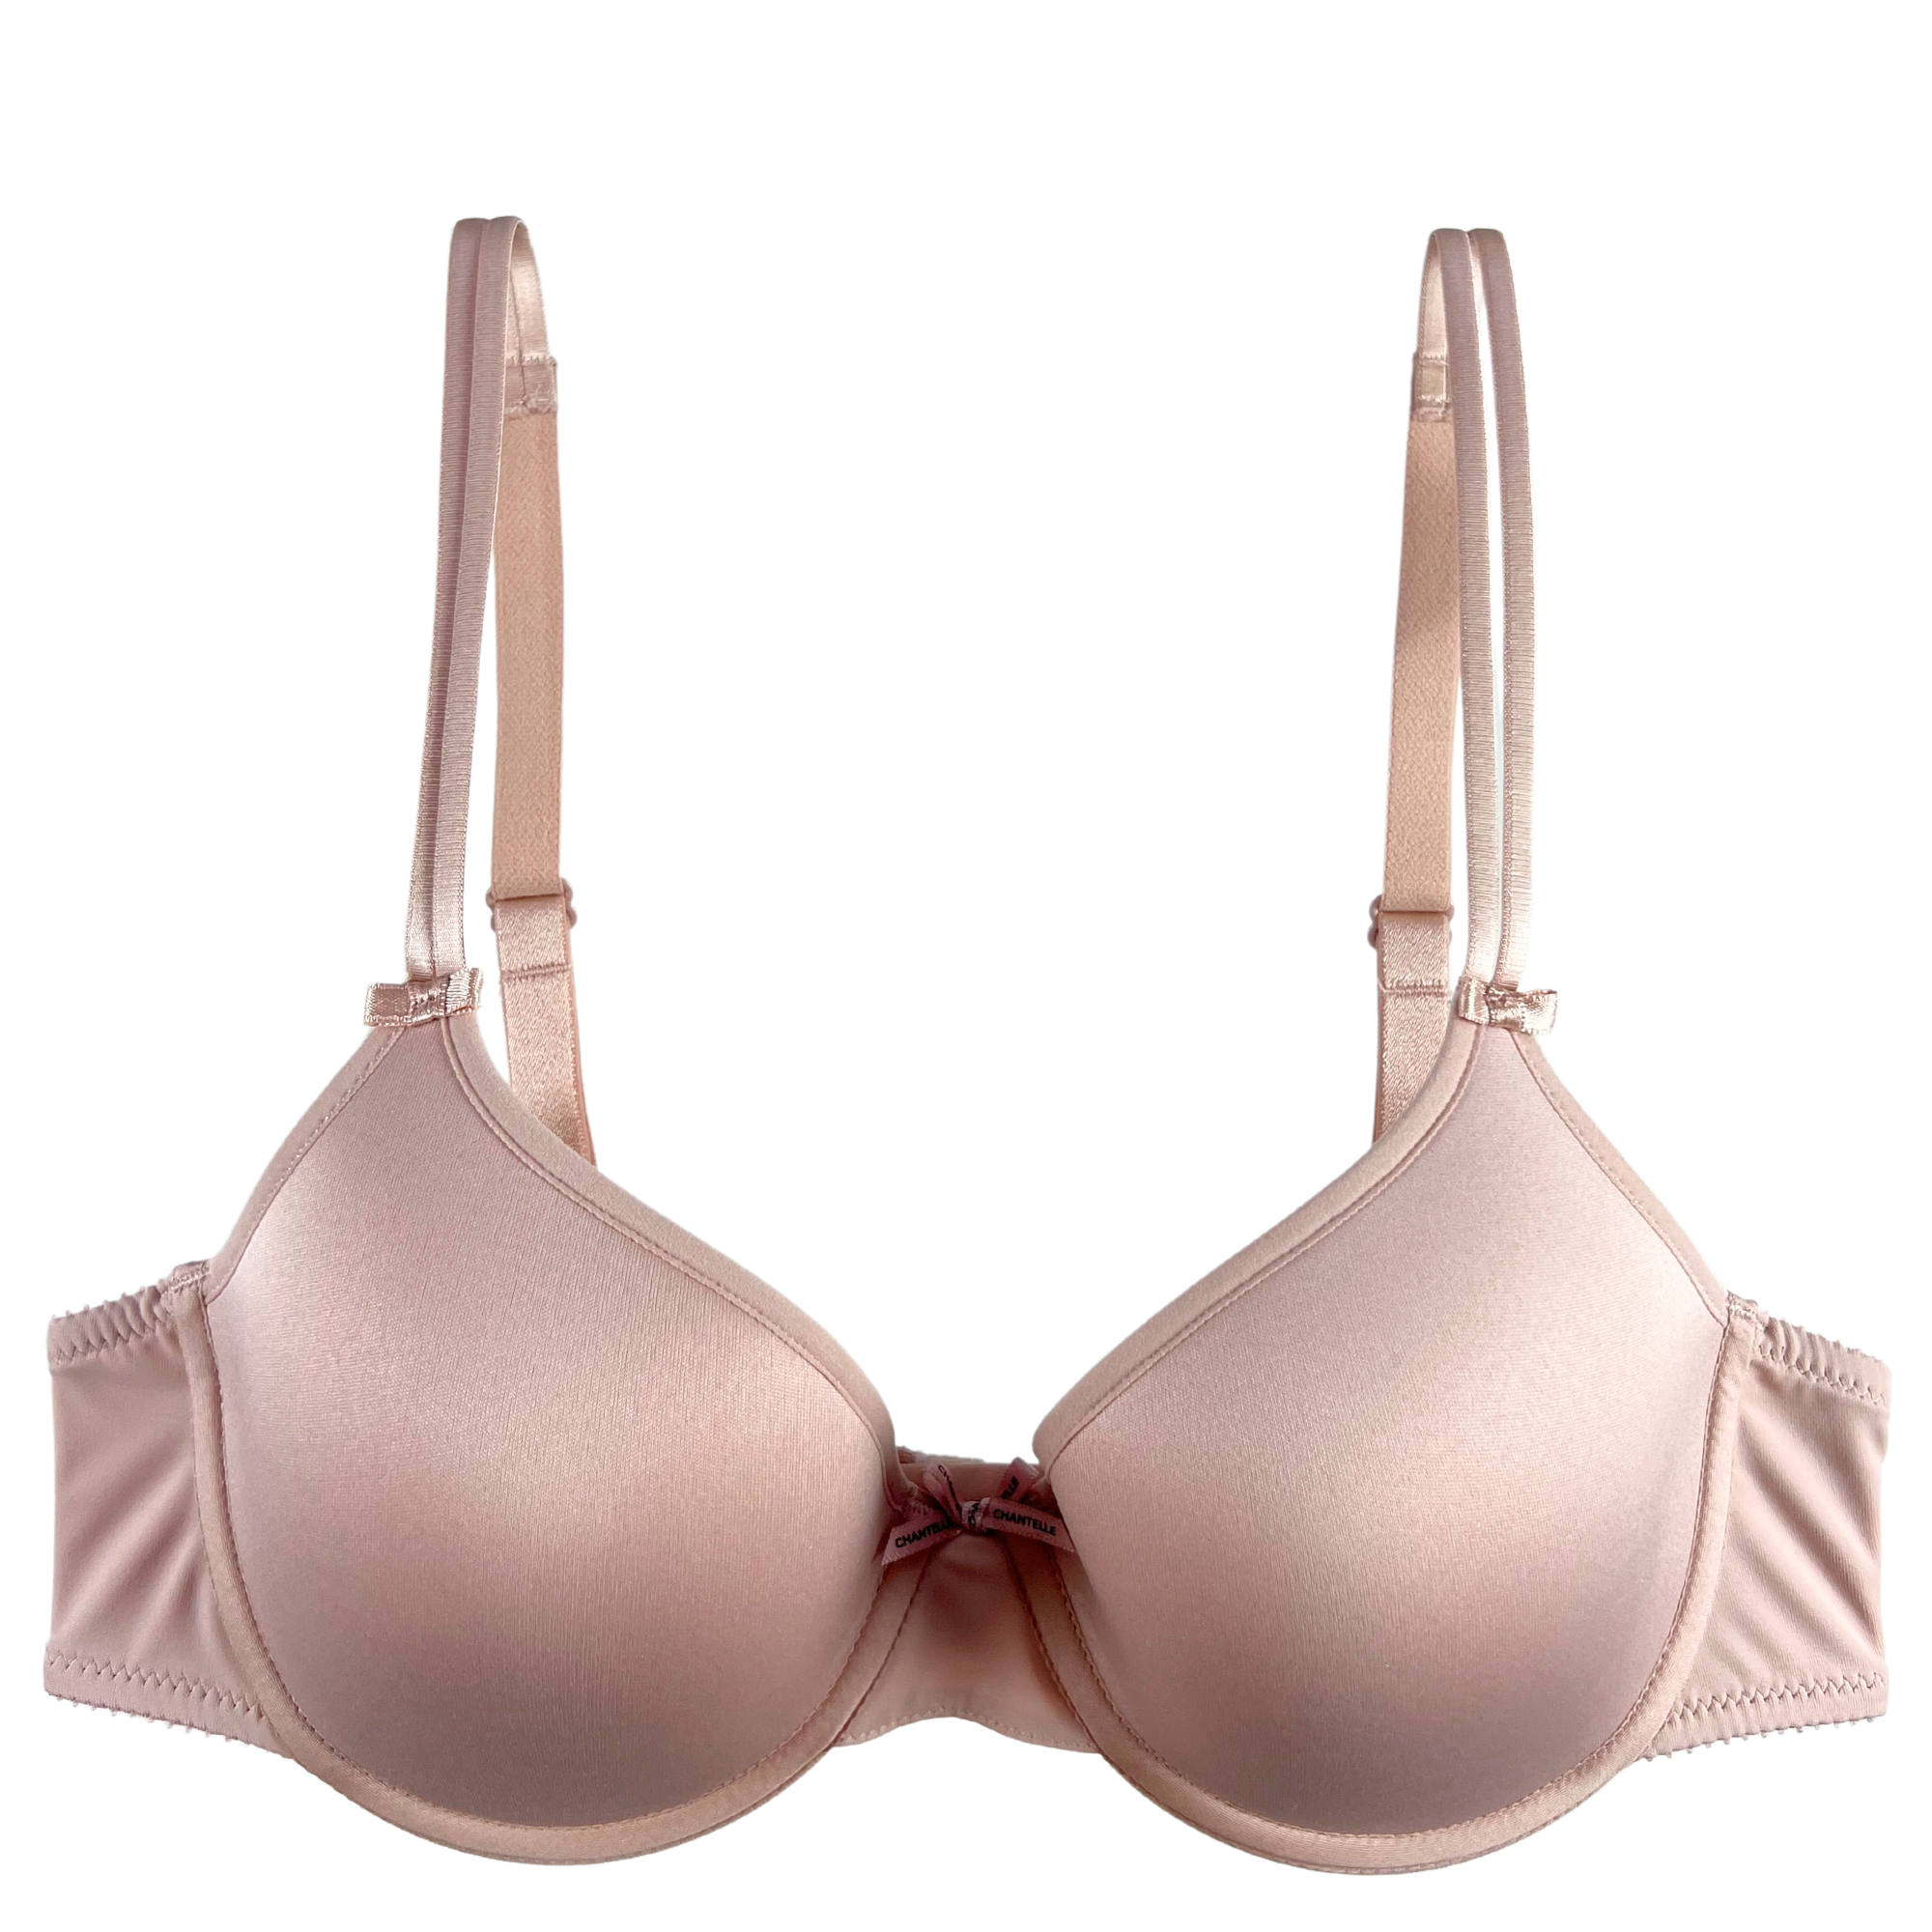 Chantelle mauve pink regular bra size 32 DDD